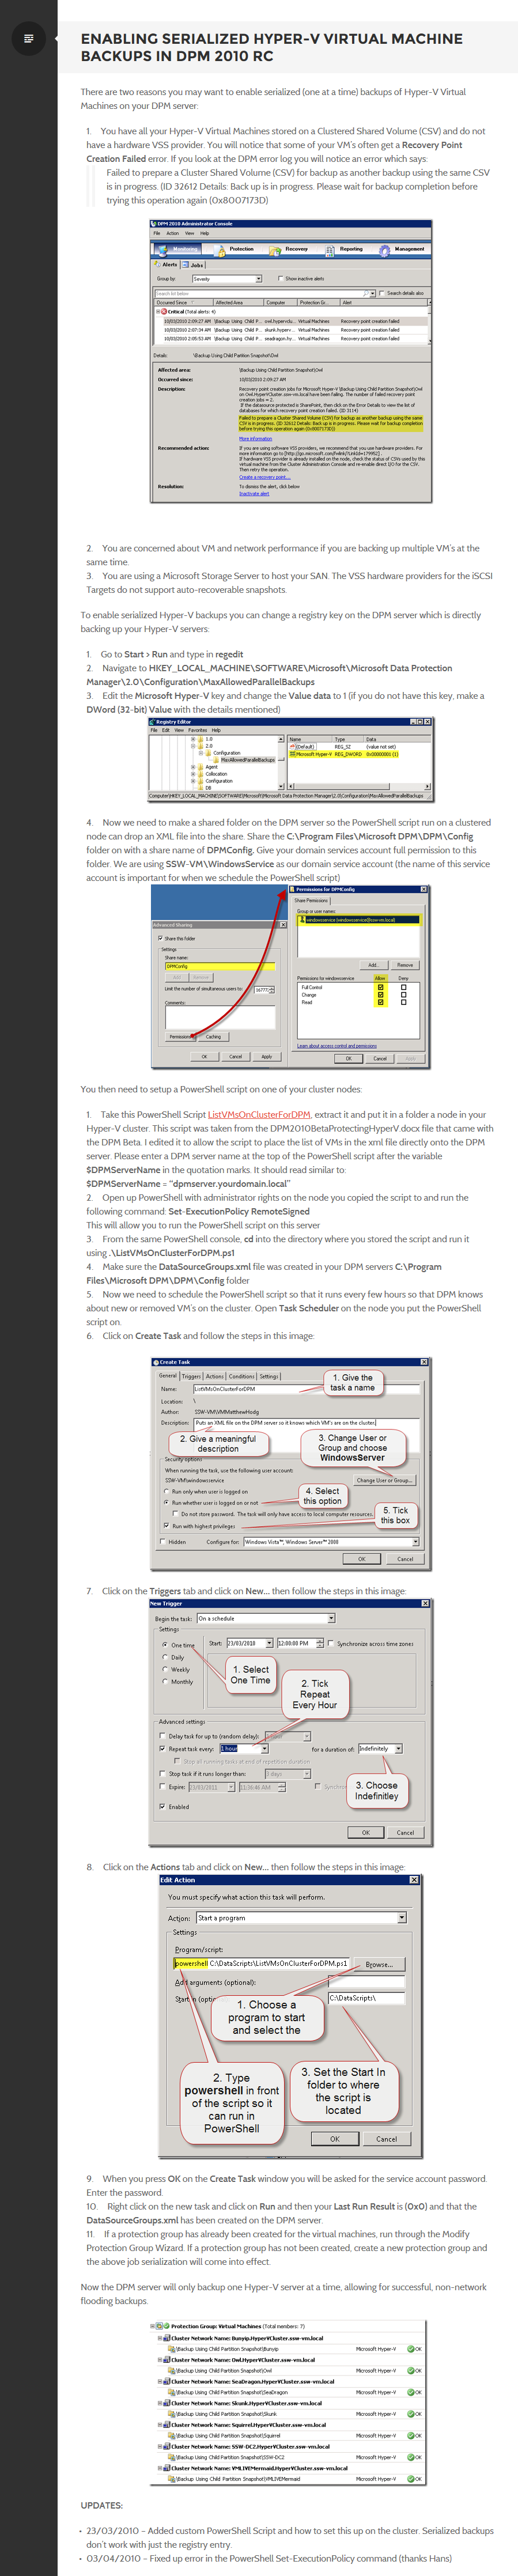 How To Run VirtualBox on WHS 2001 - Part 1